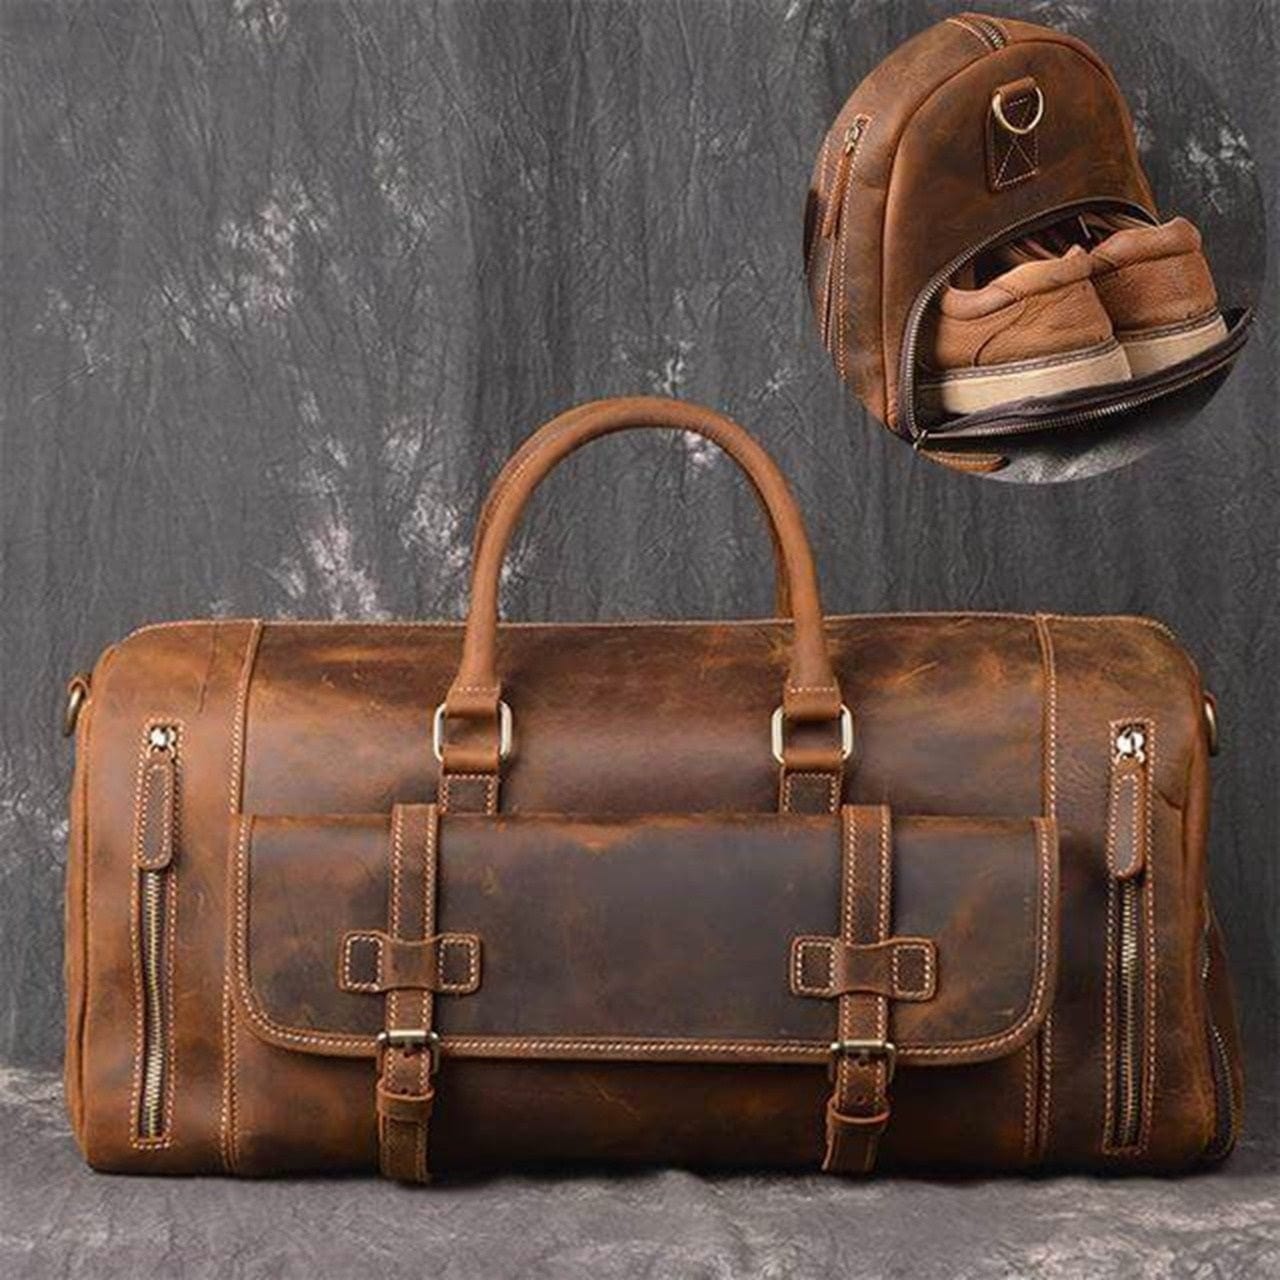 Kinnoti Large Genuine Leather Travel Duffle Bag